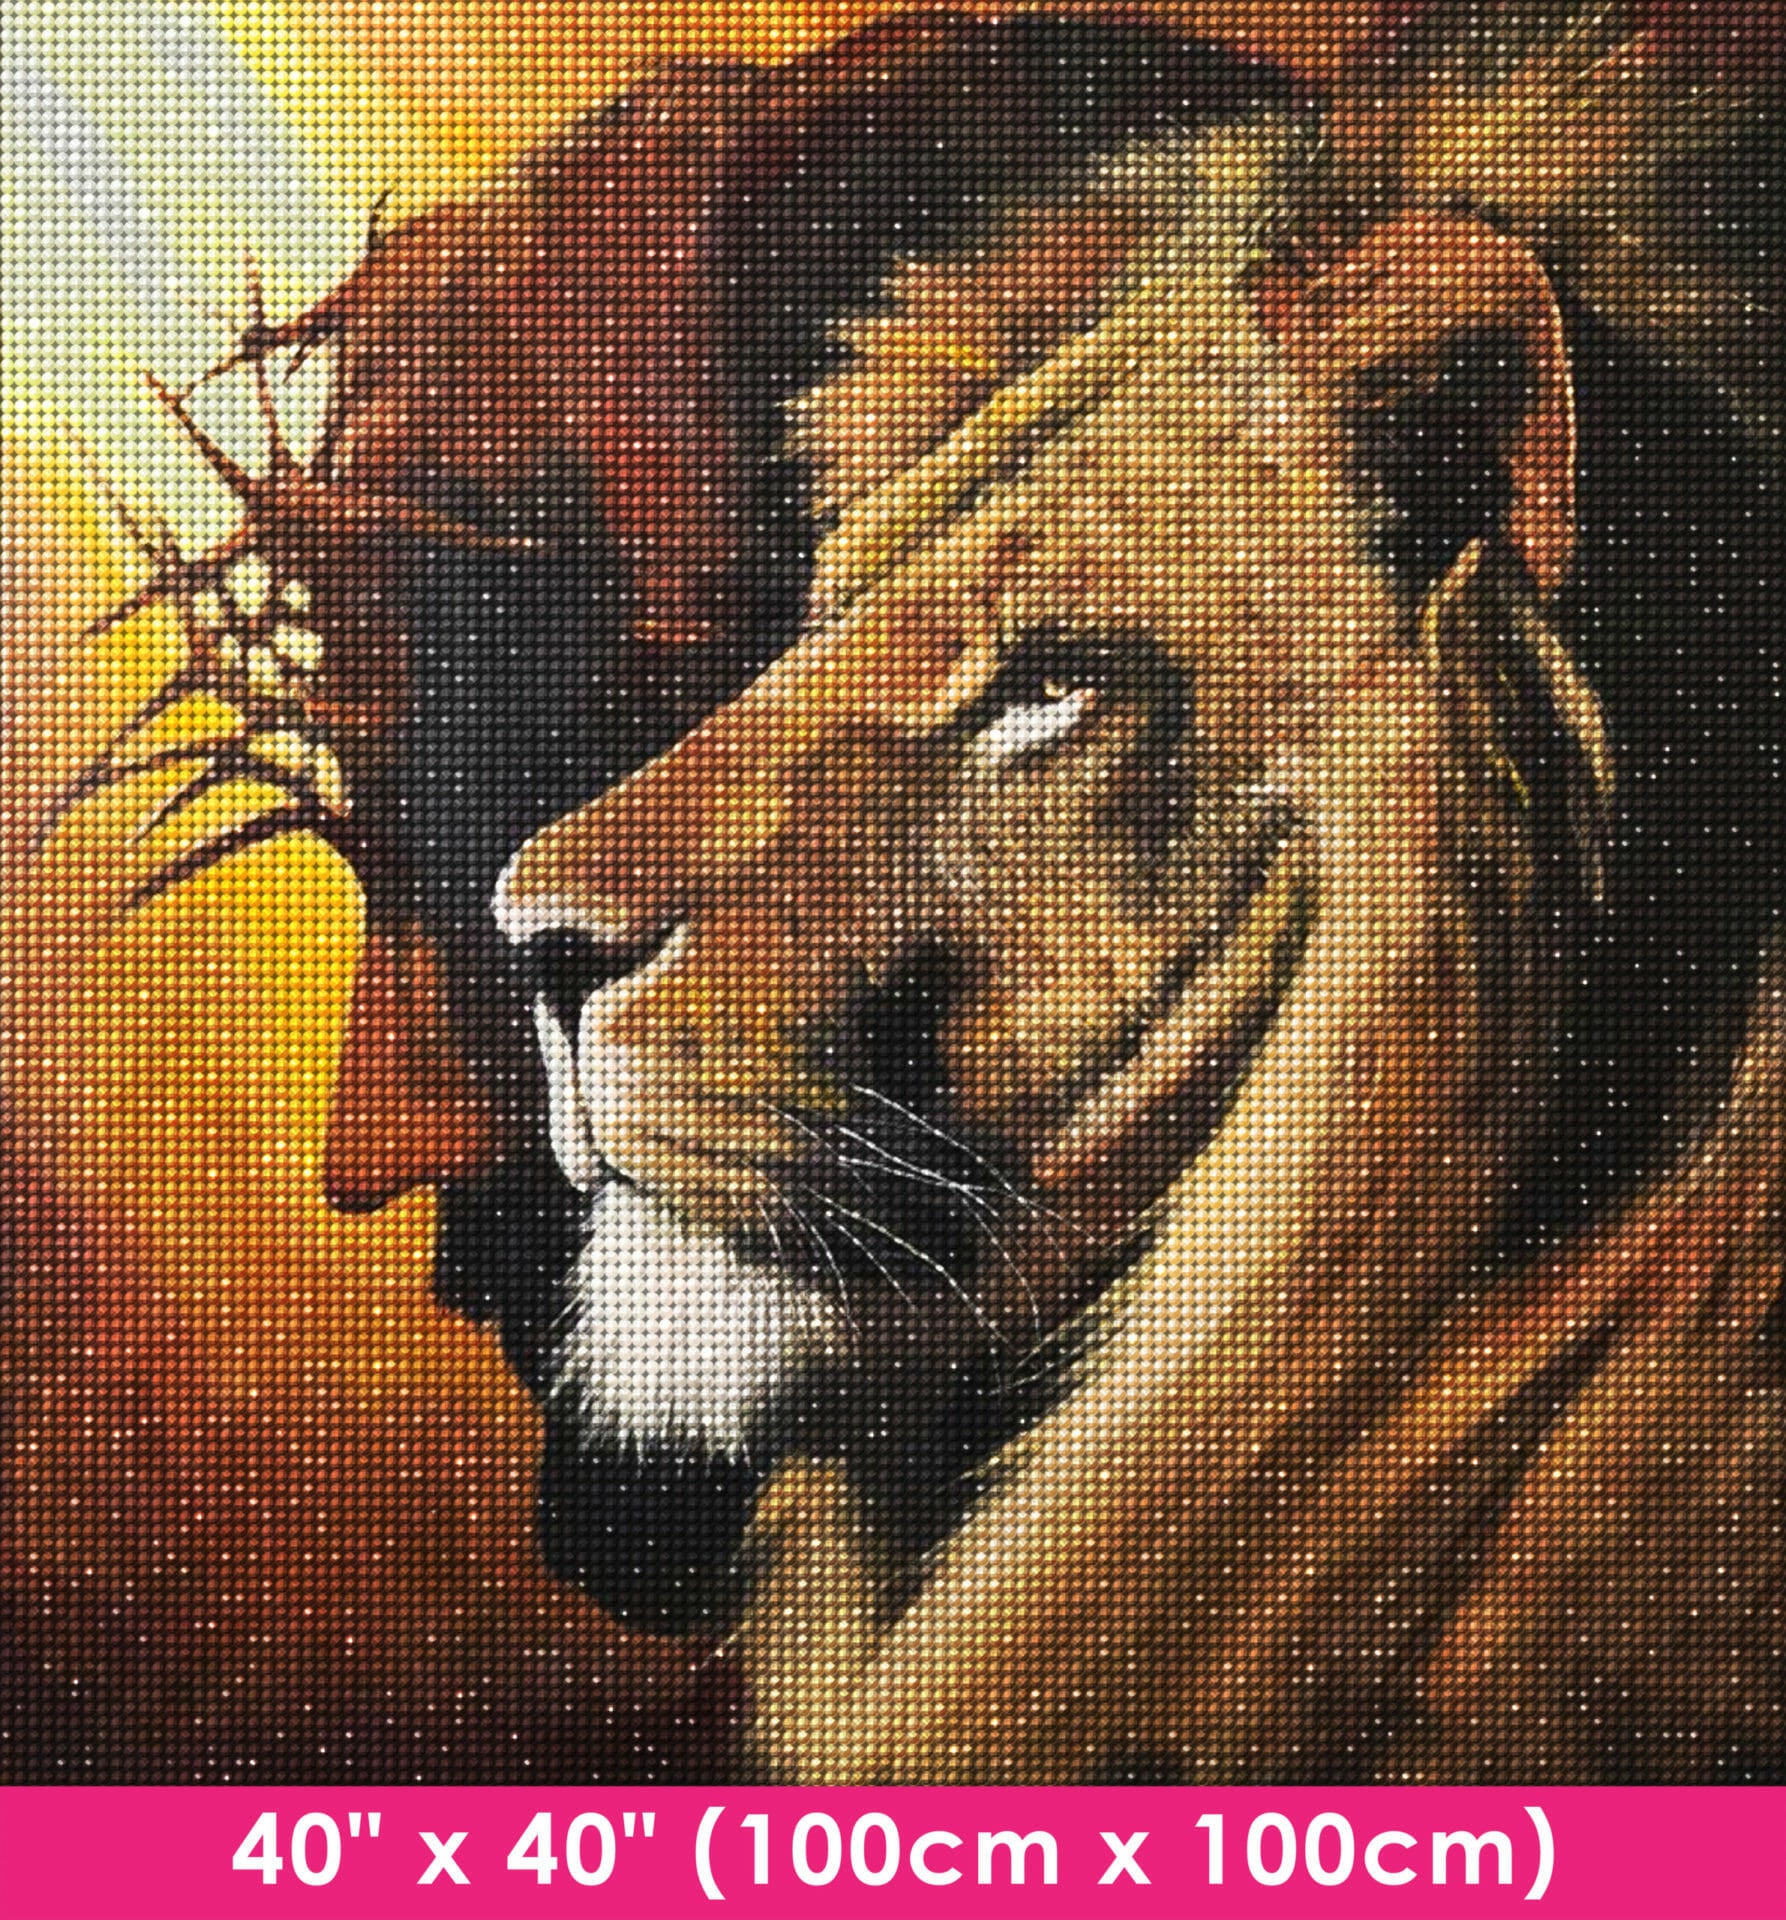 Lion and Jesus (1)